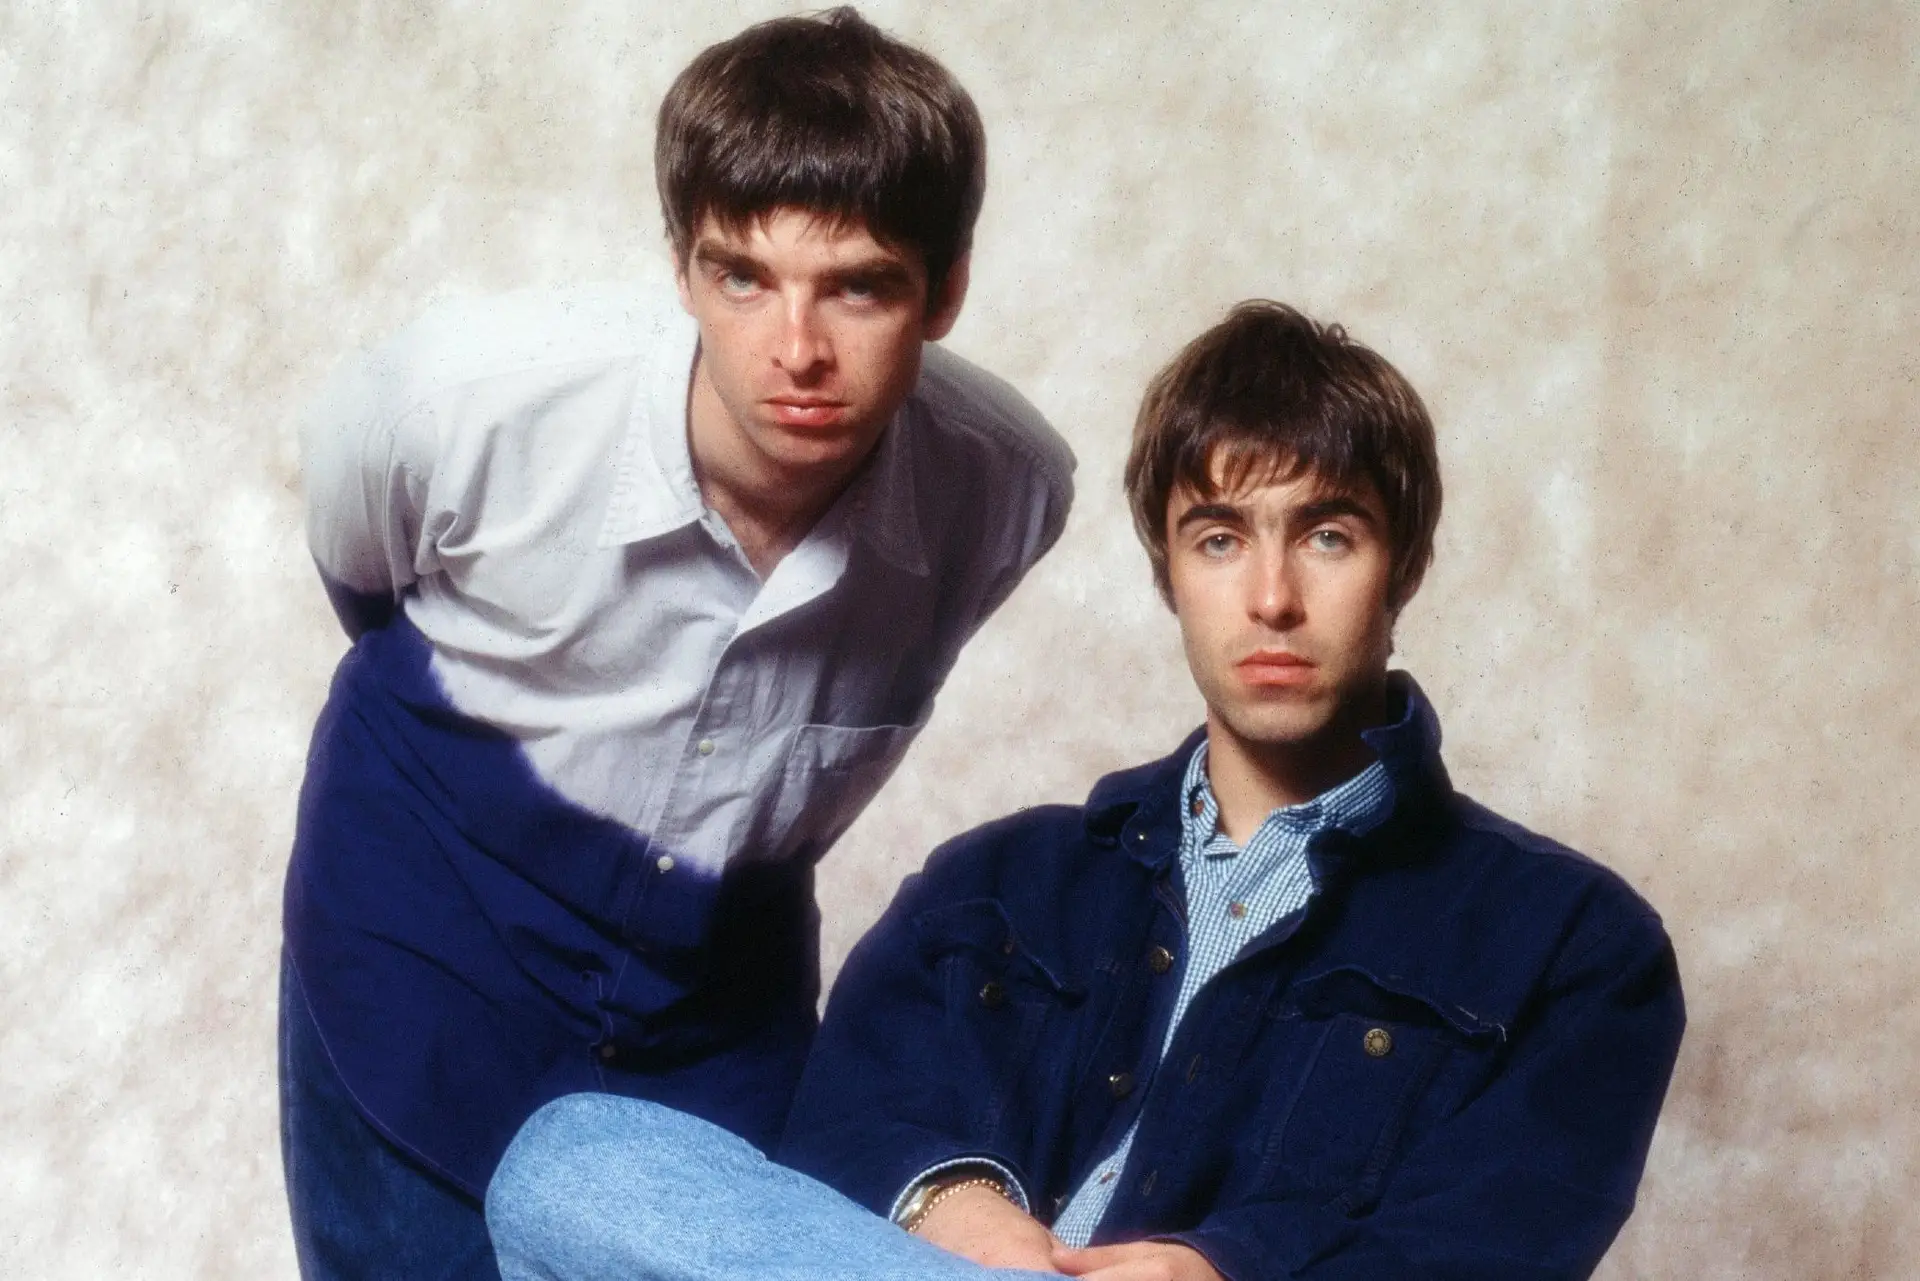 Noel e Liam Gallagher, dos Oasis, em 1994 / foto: Getty Images